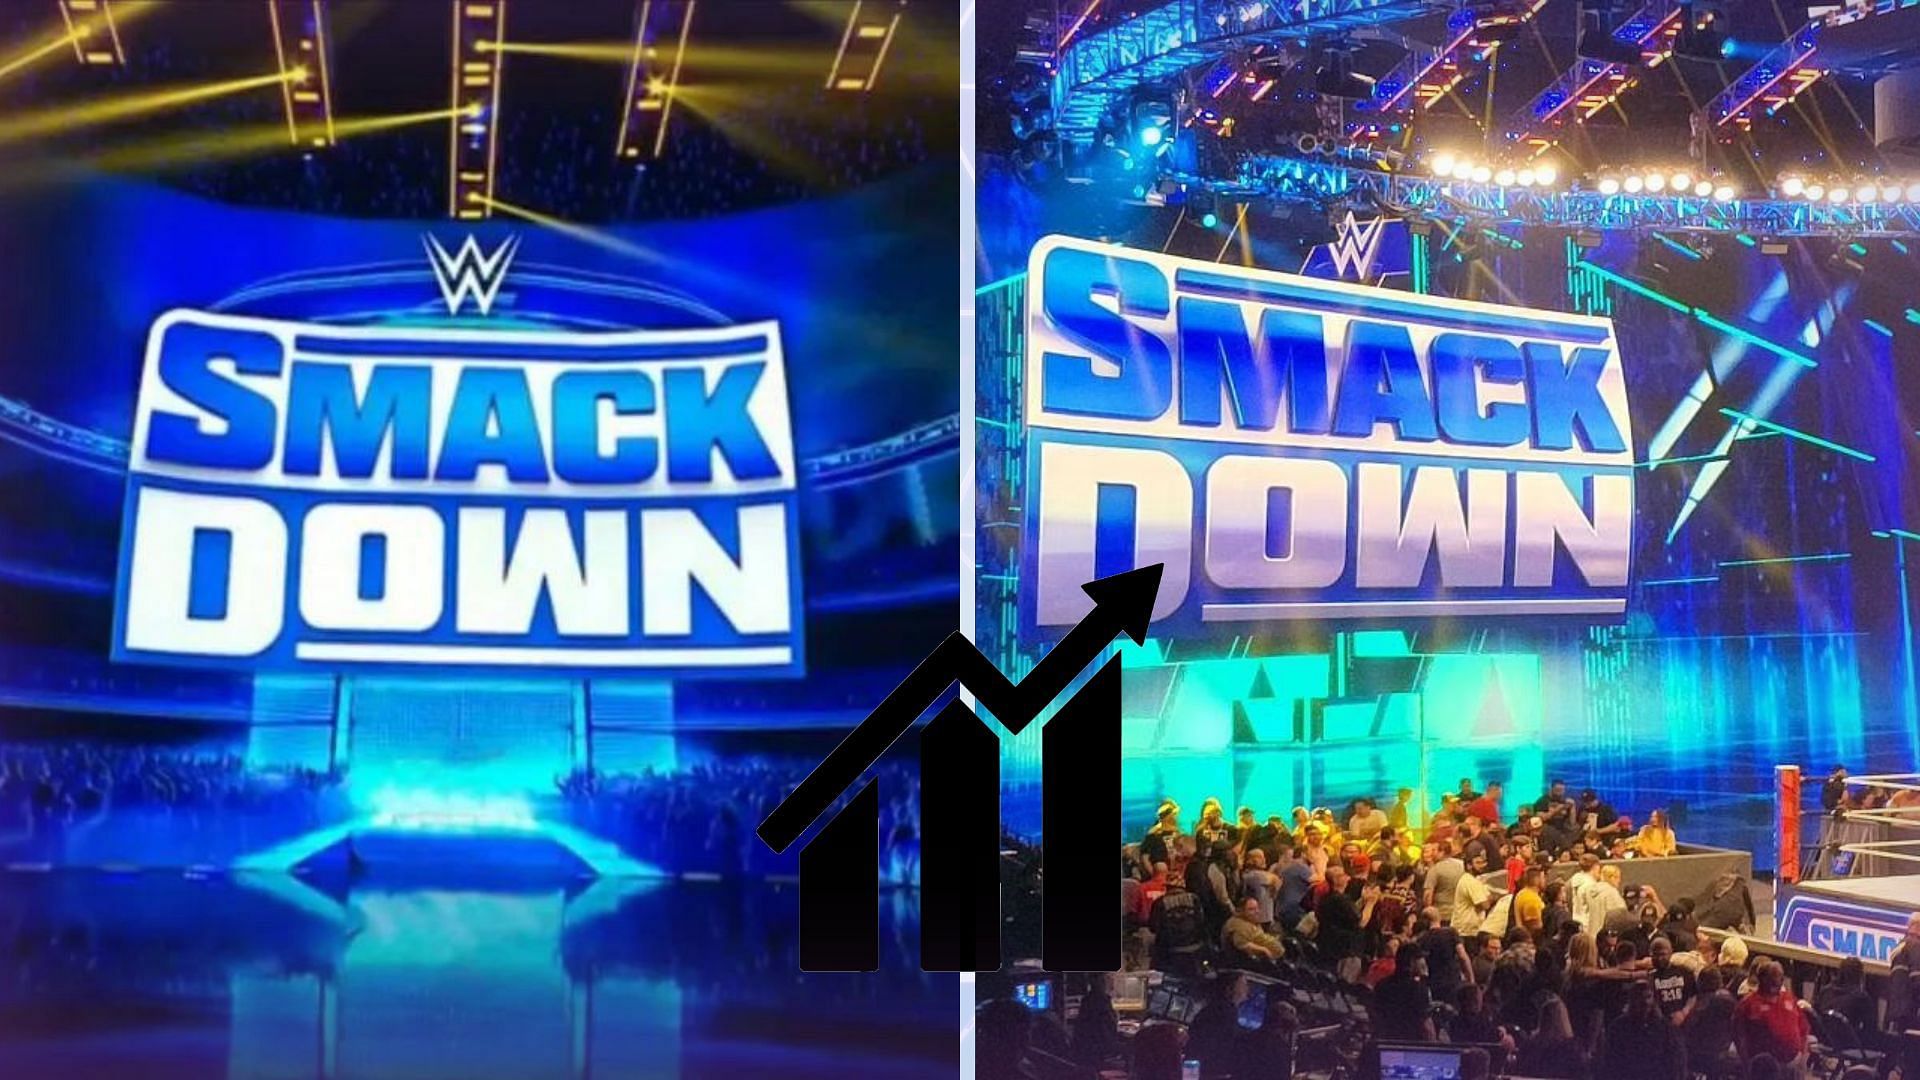 WWE SmackDown seemingly saw a huge increase in ticket sales.